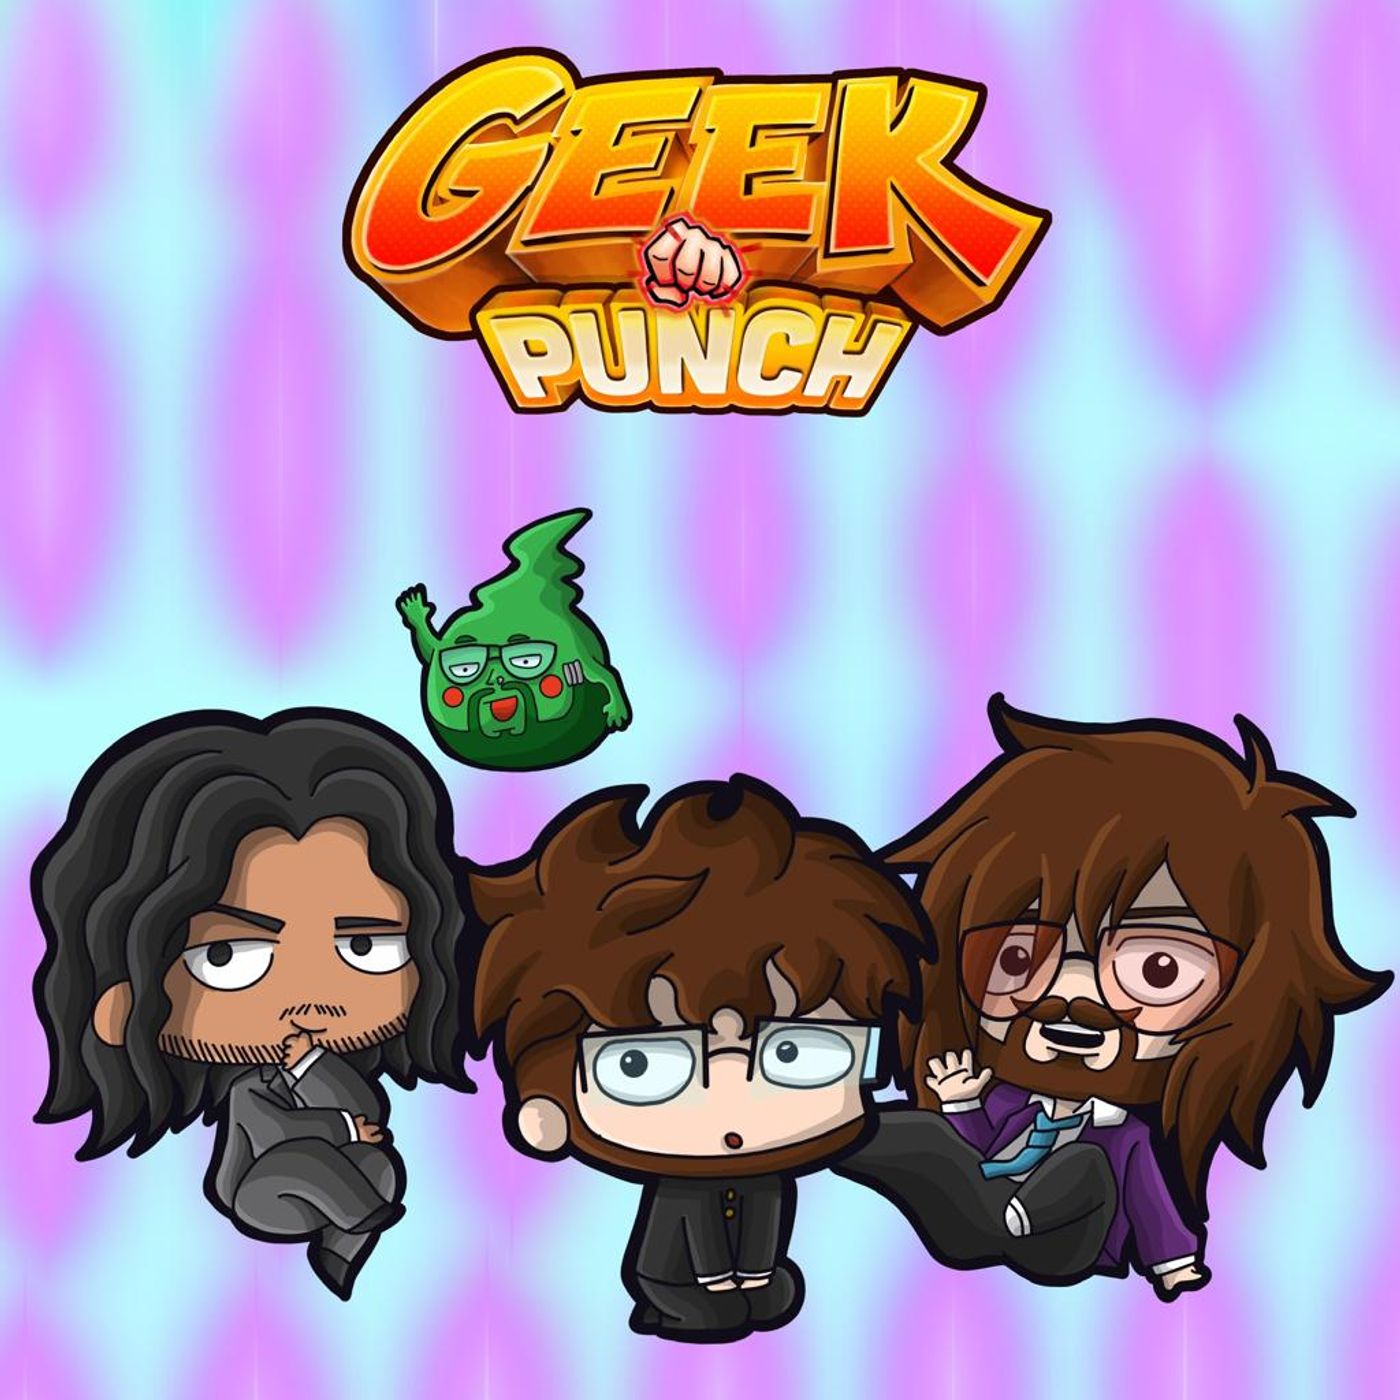 Geek Punch - Punch 58 - Mob psycho 100 - Todo menos argumentos